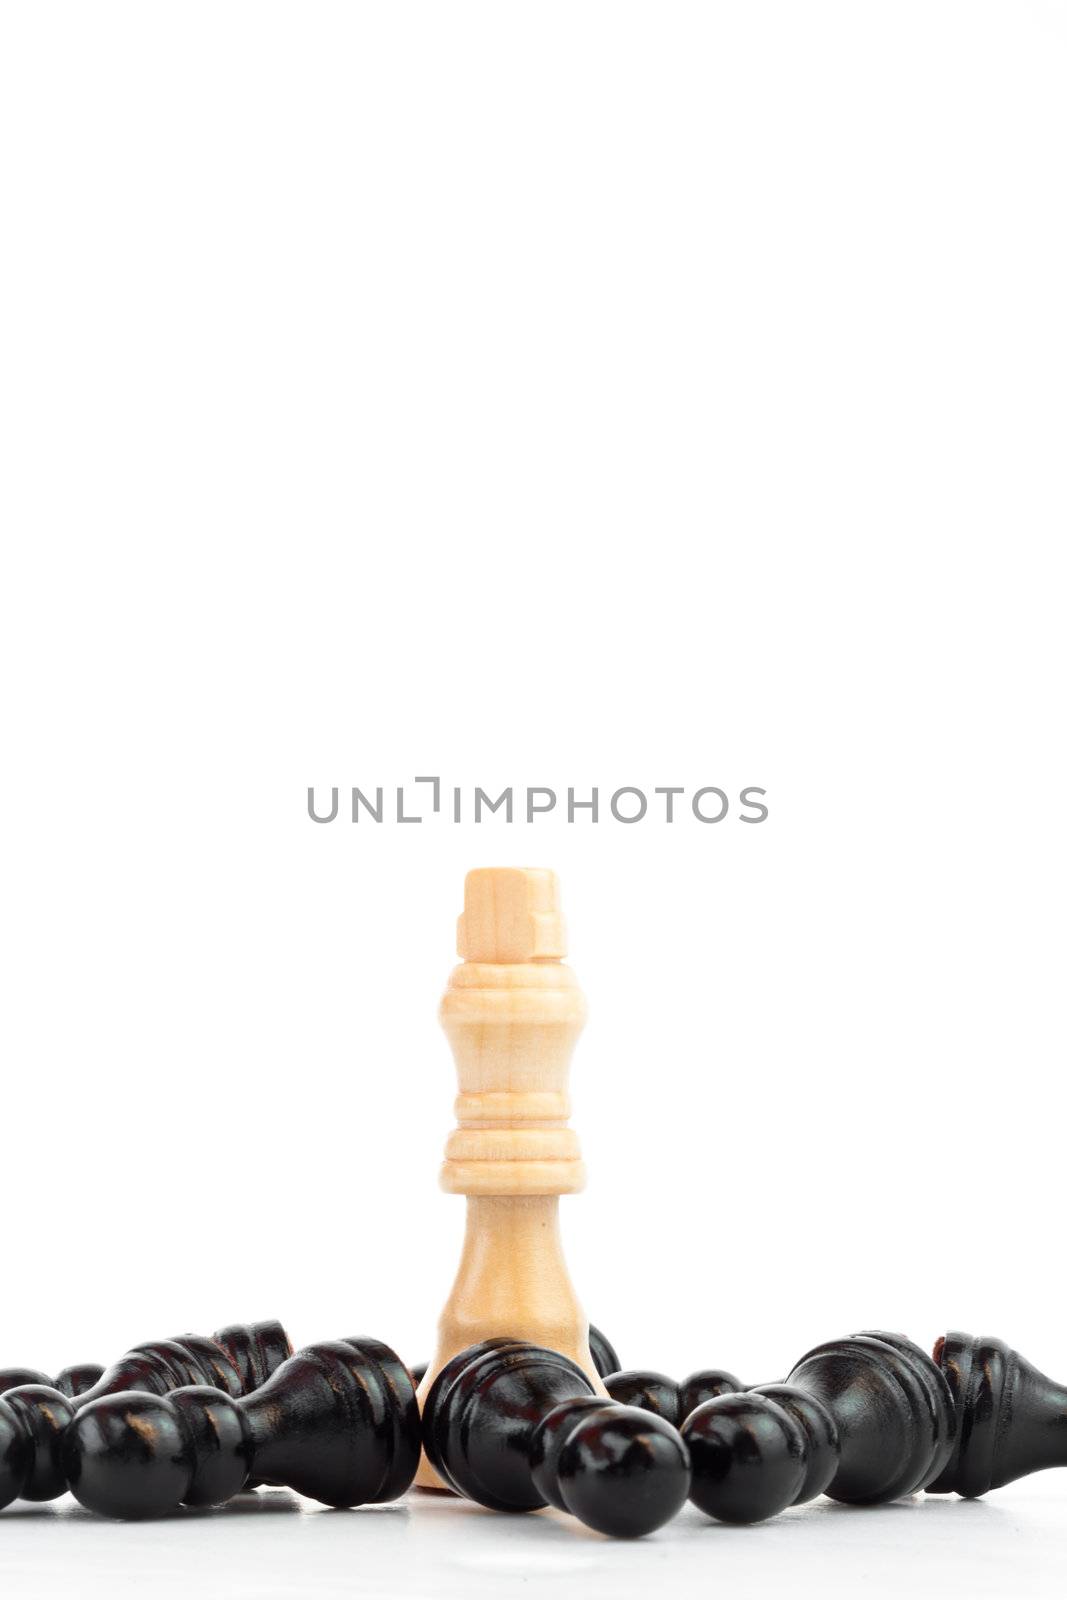 Chess game by Wavebreakmedia